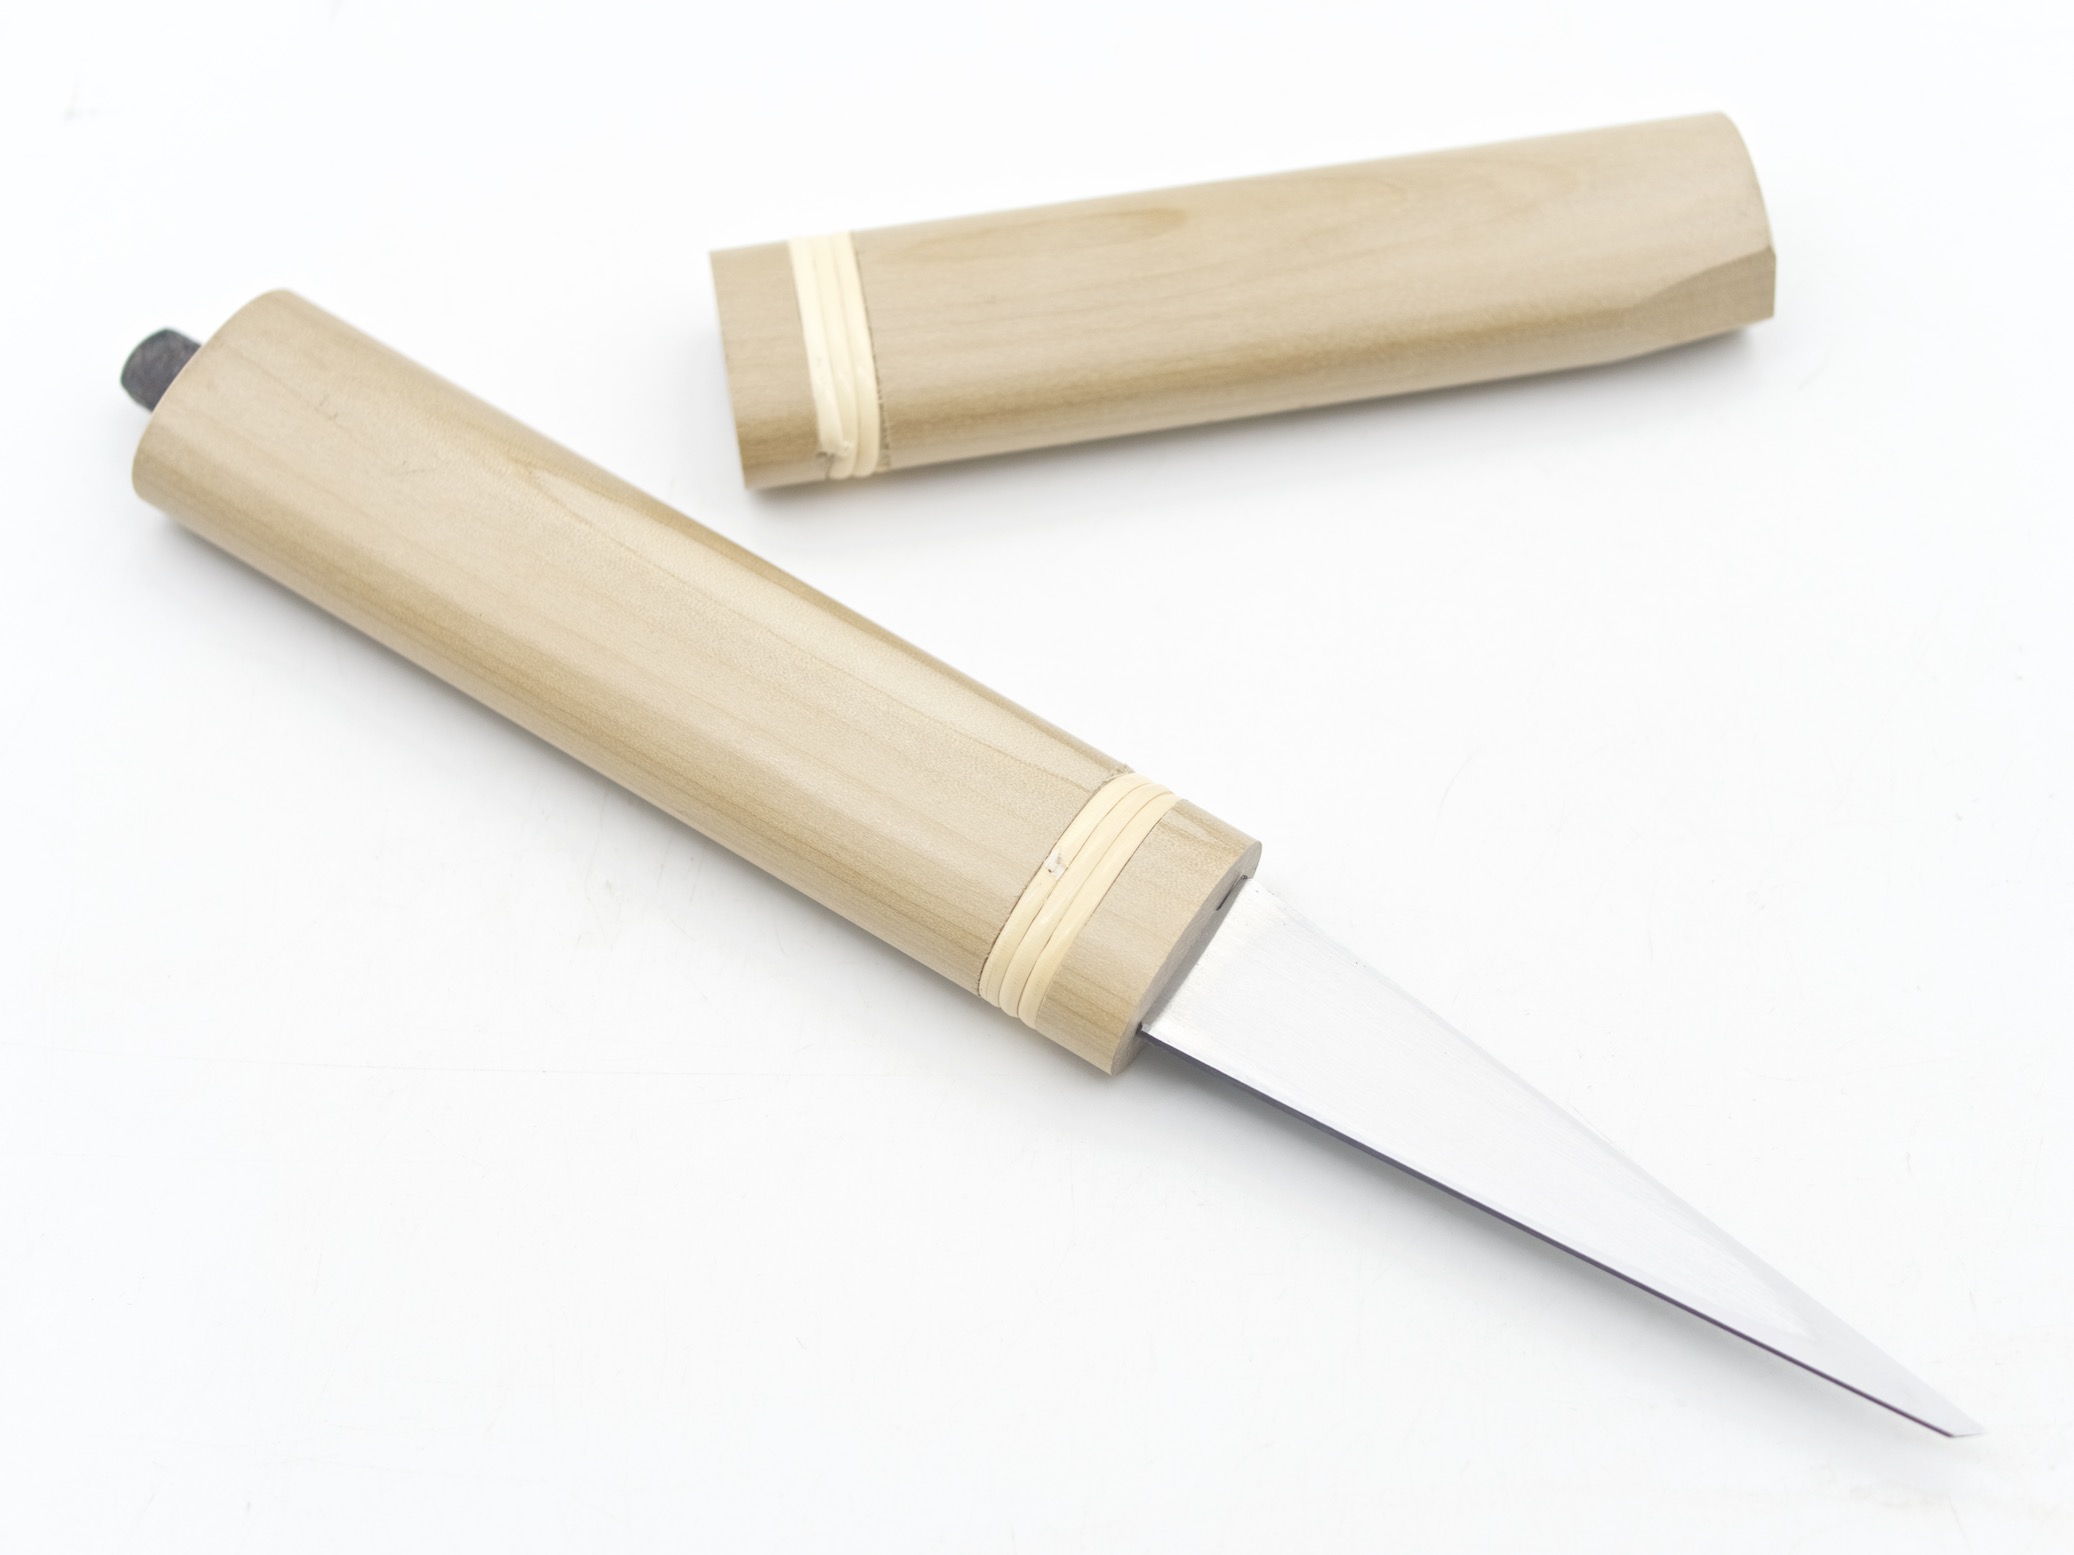 Japanese Kogatana wood carving knife set w/ roll-up bag, set of 6